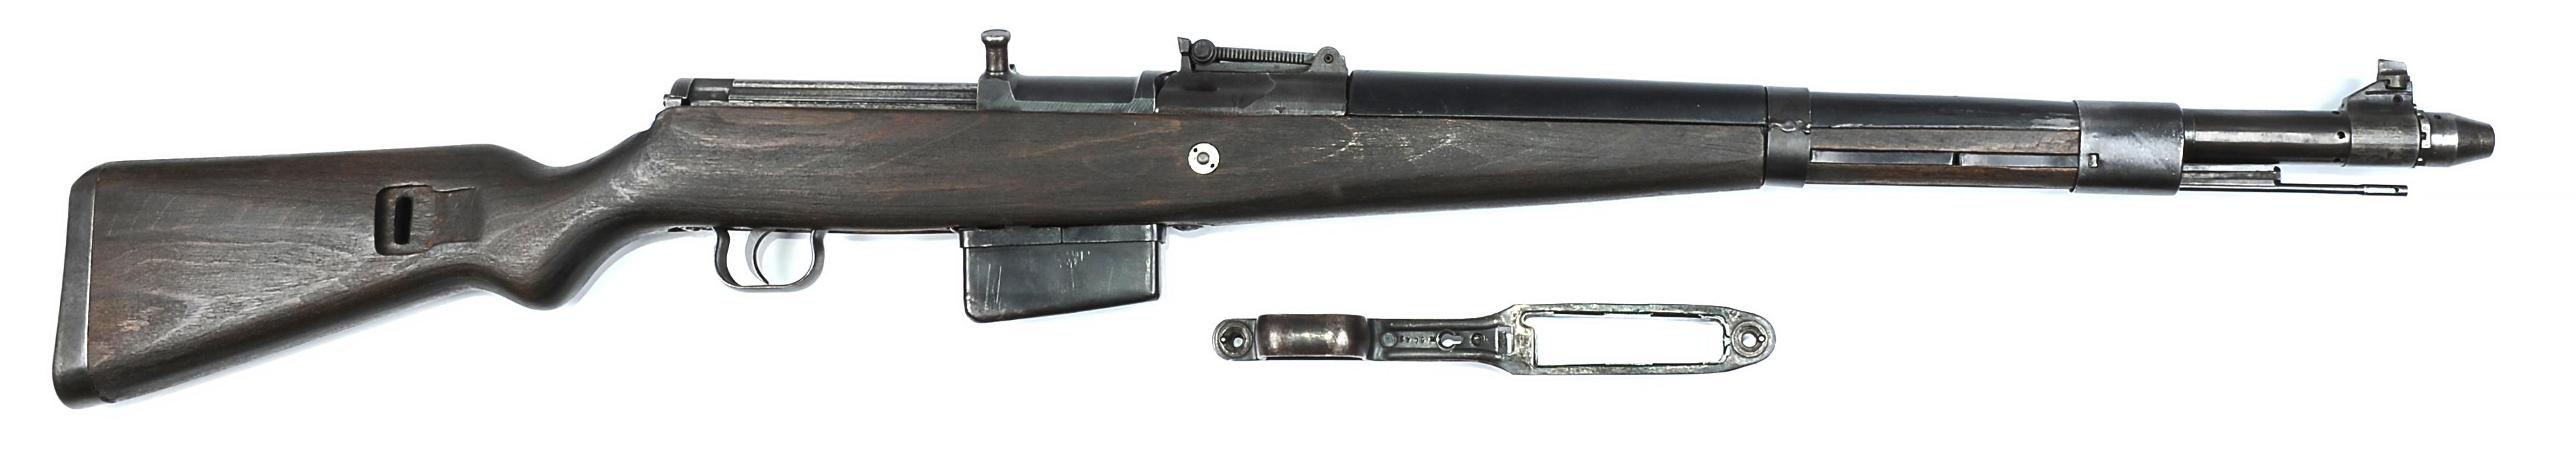 Nazi German World War II Gewehr G41 8mm Mauser Semi Automatic Rifle duv 43 FFL Required 5043 (A1)